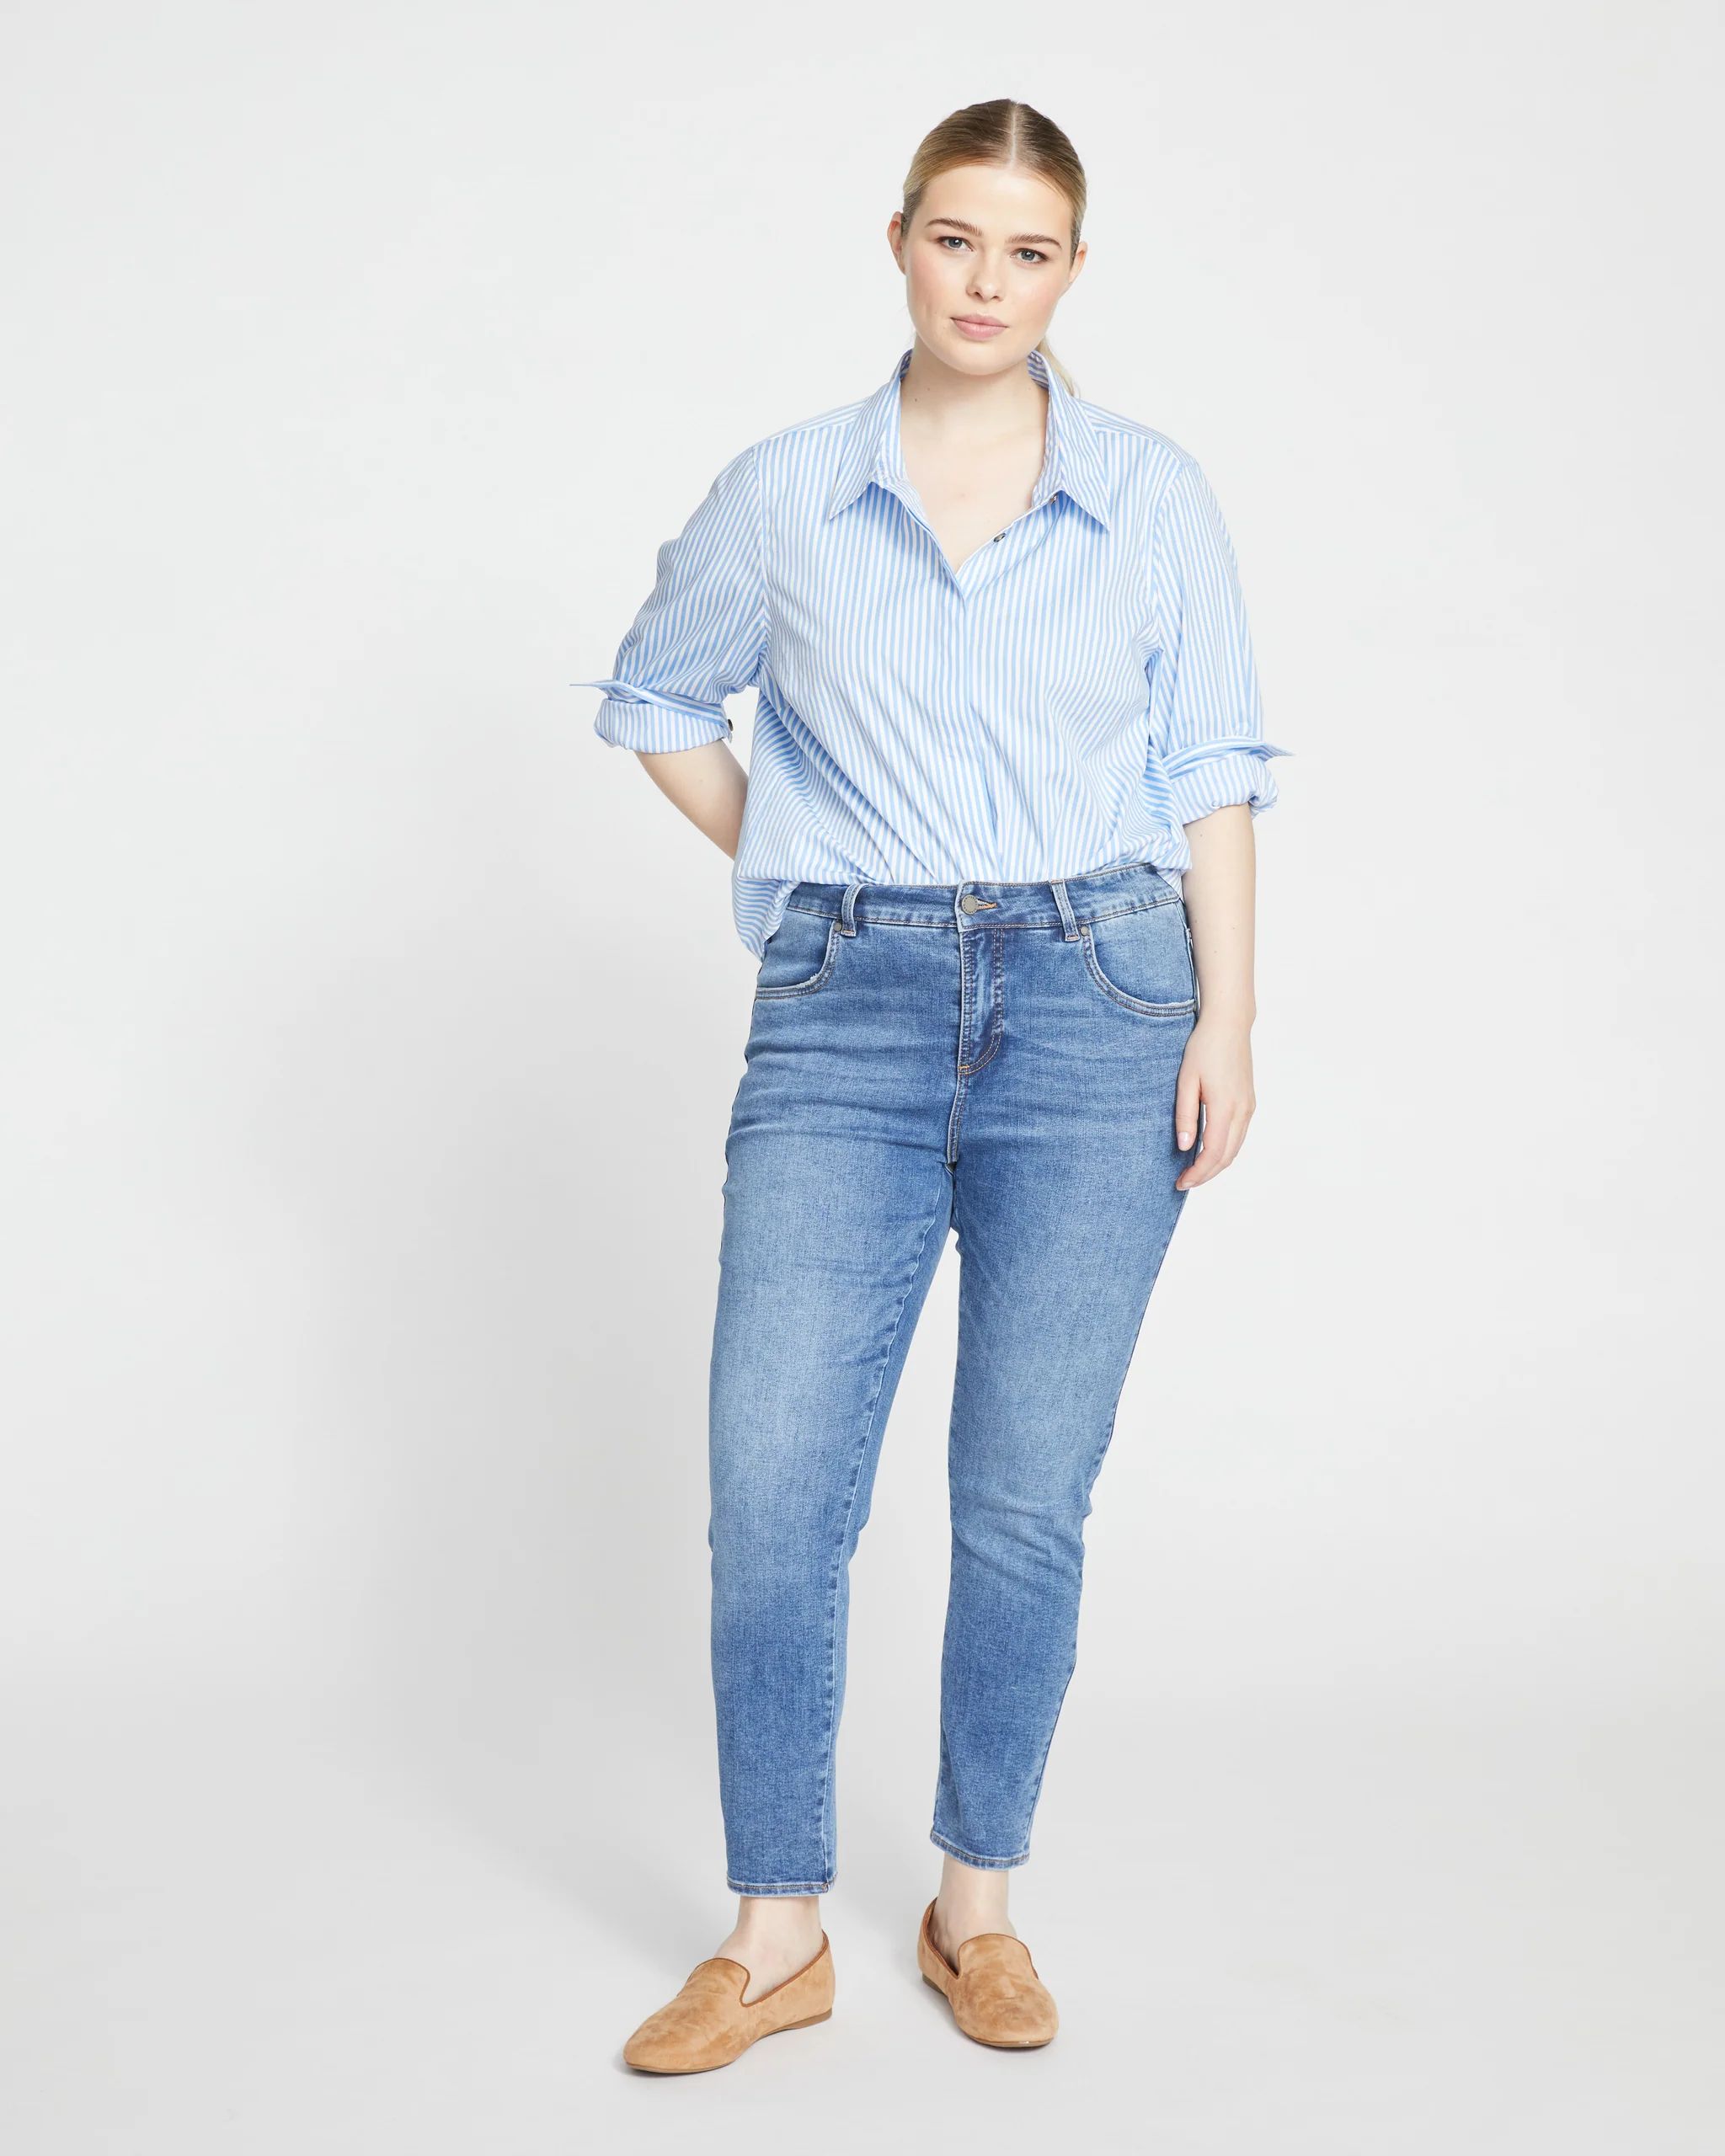 Seine High Rise Skinny Jeans 27 Inch
   Vintage Indigo | Universal Standard